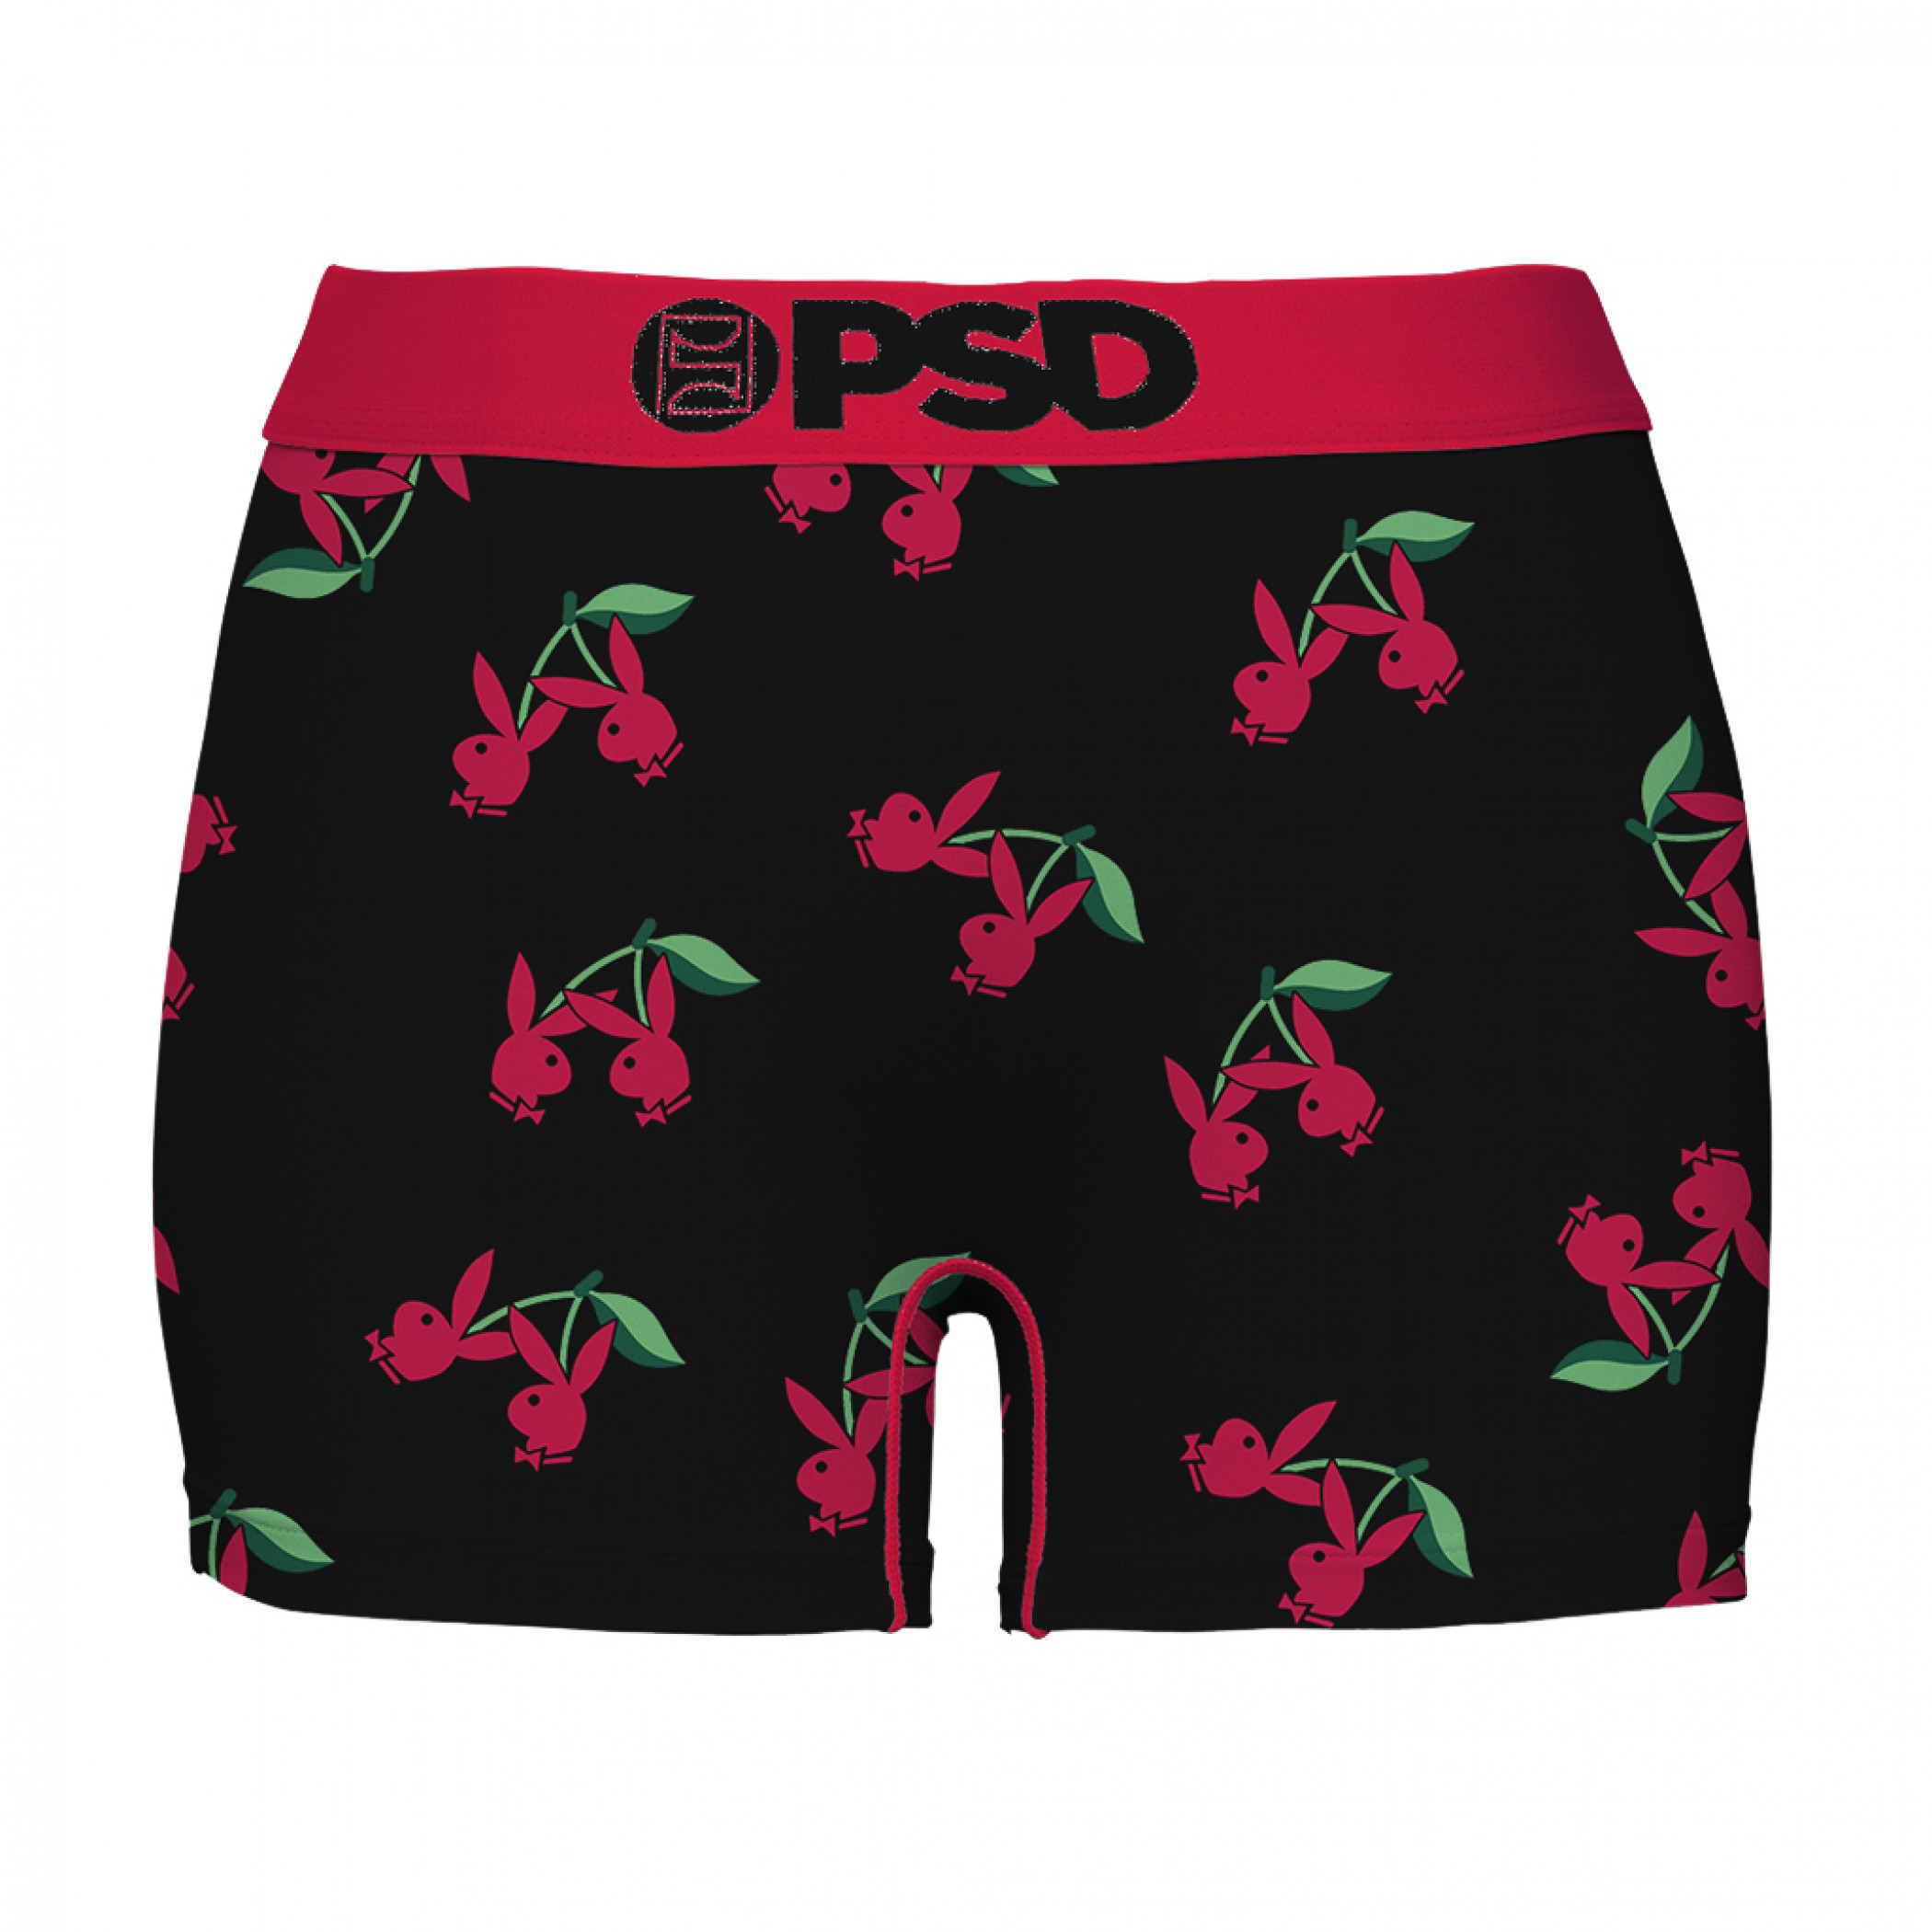 Playboy Bunny Mascot Microfiber Blend Women's PSD Boy Shorts Underwear-Large  